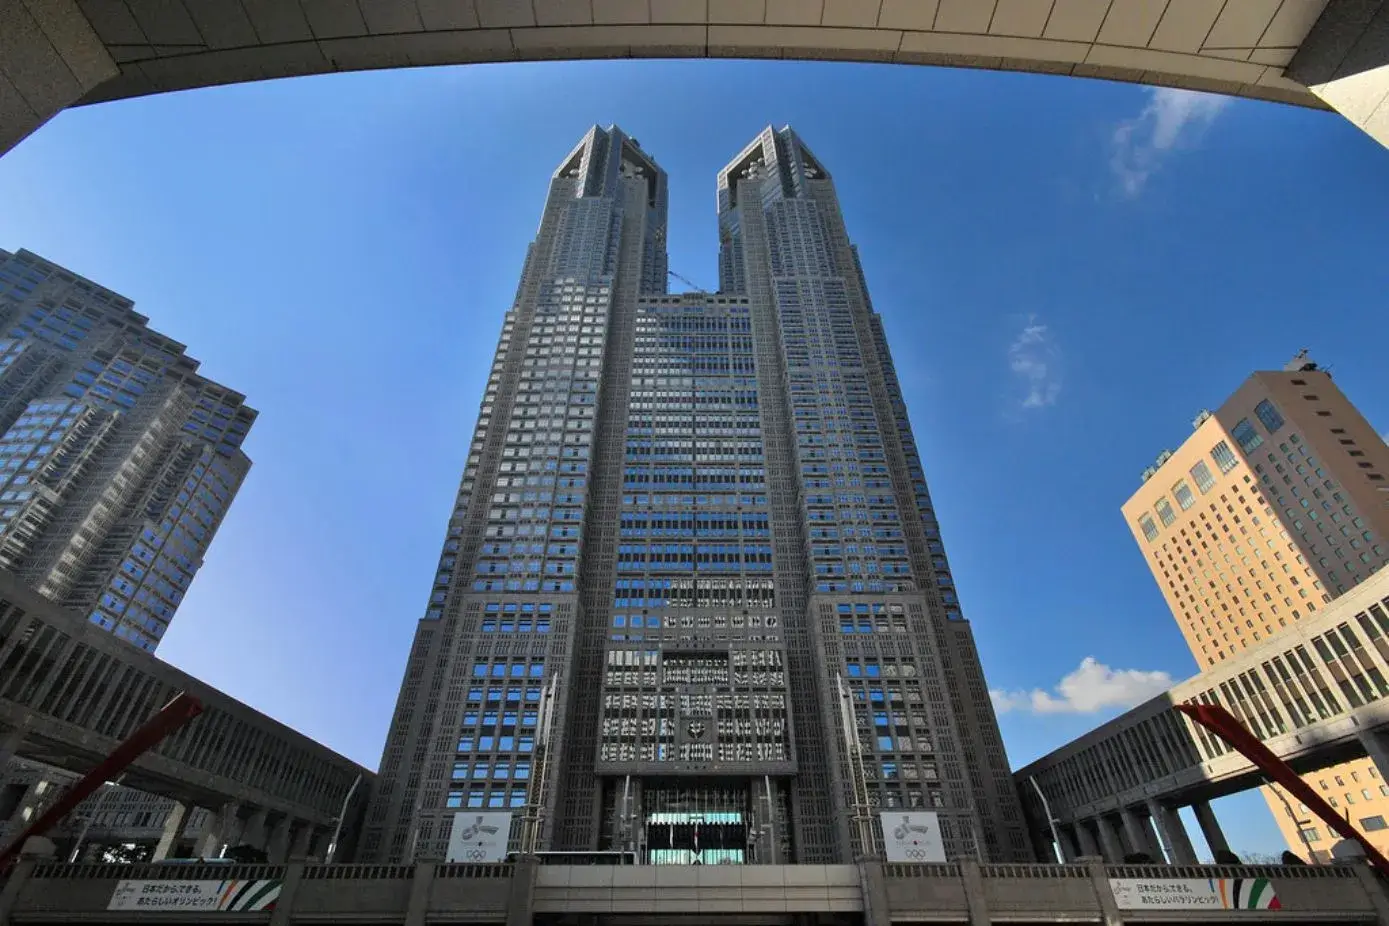 Best Things to Do in Shinjuku - Tokyo Metropolitan Government Building